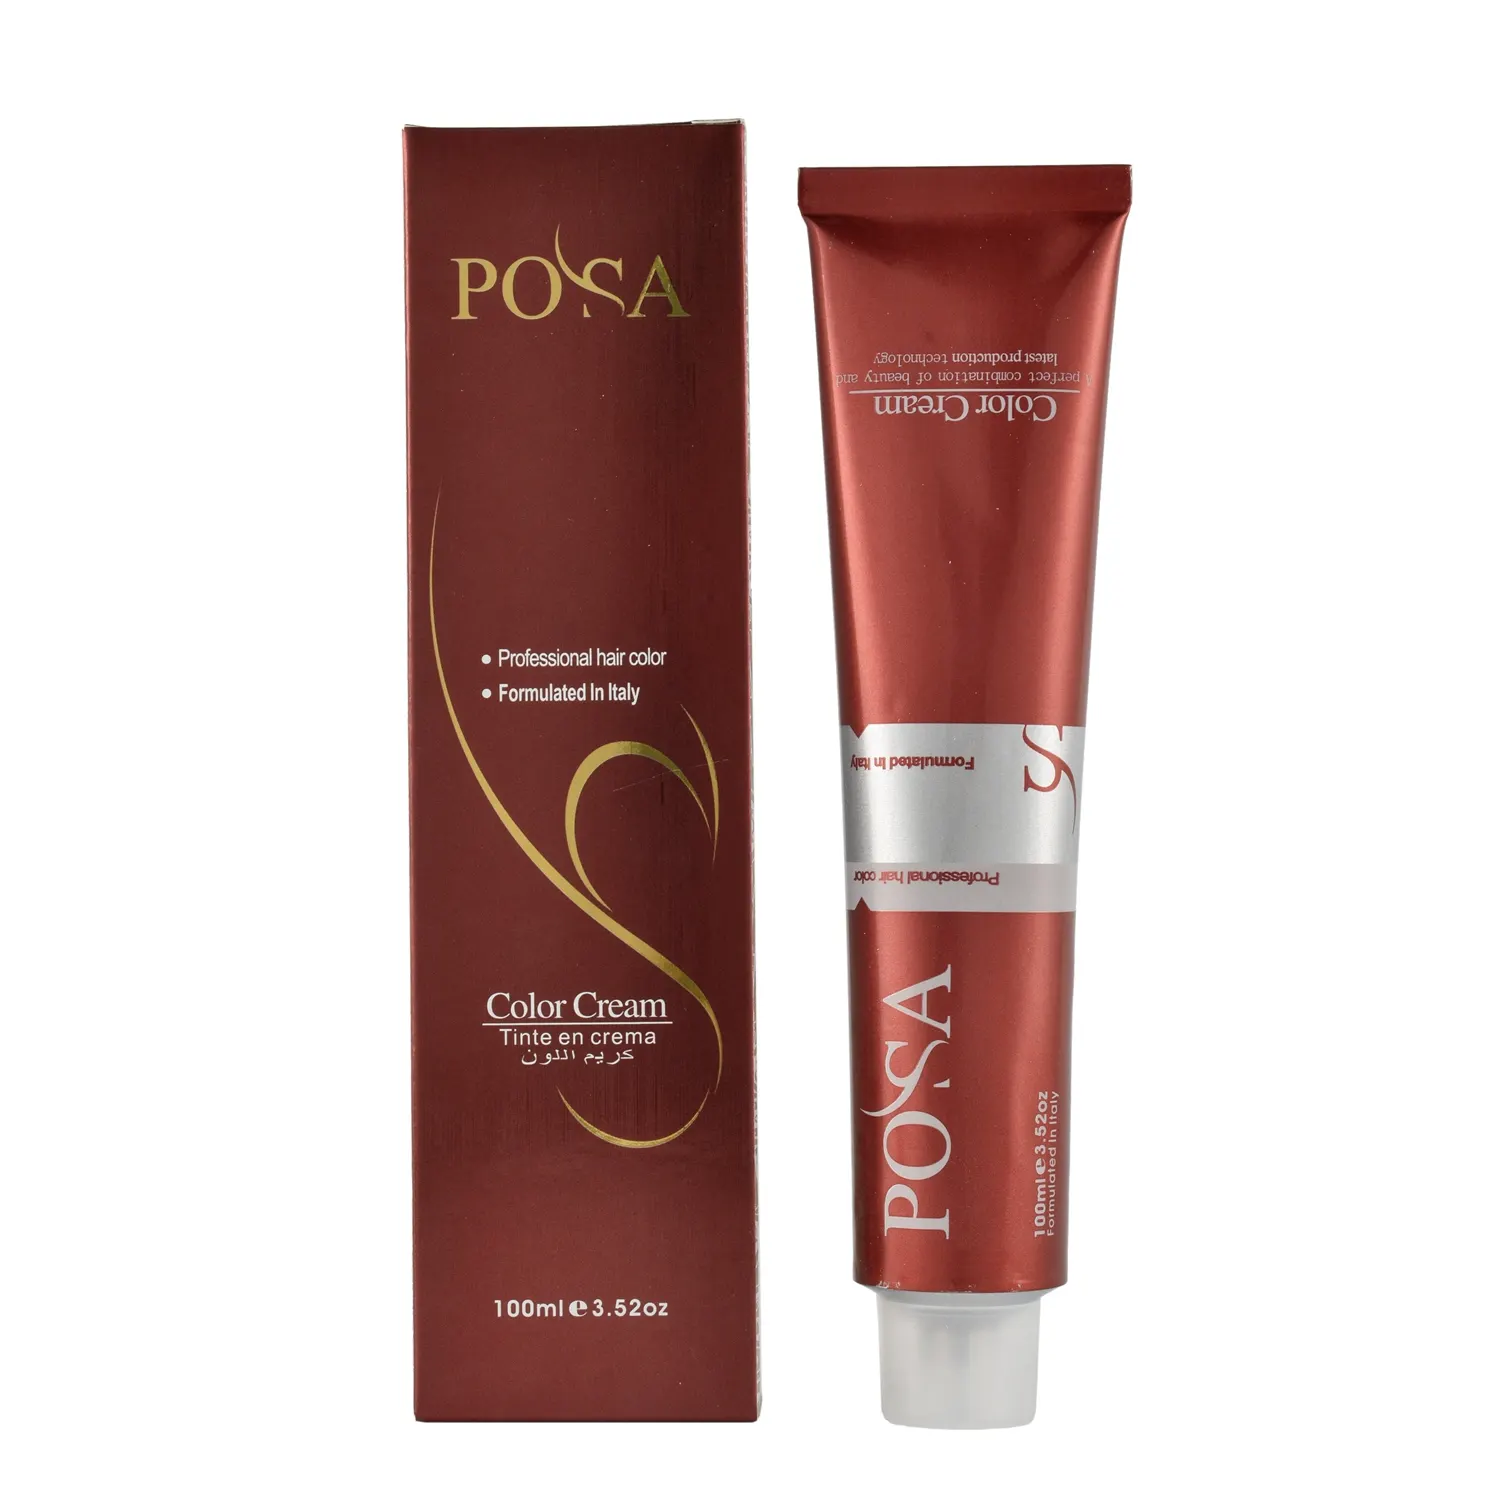 POSA Free Samples Hair Color Cream Popular Hair Colors Long Lasting Hair Dye Color for Professional Salon